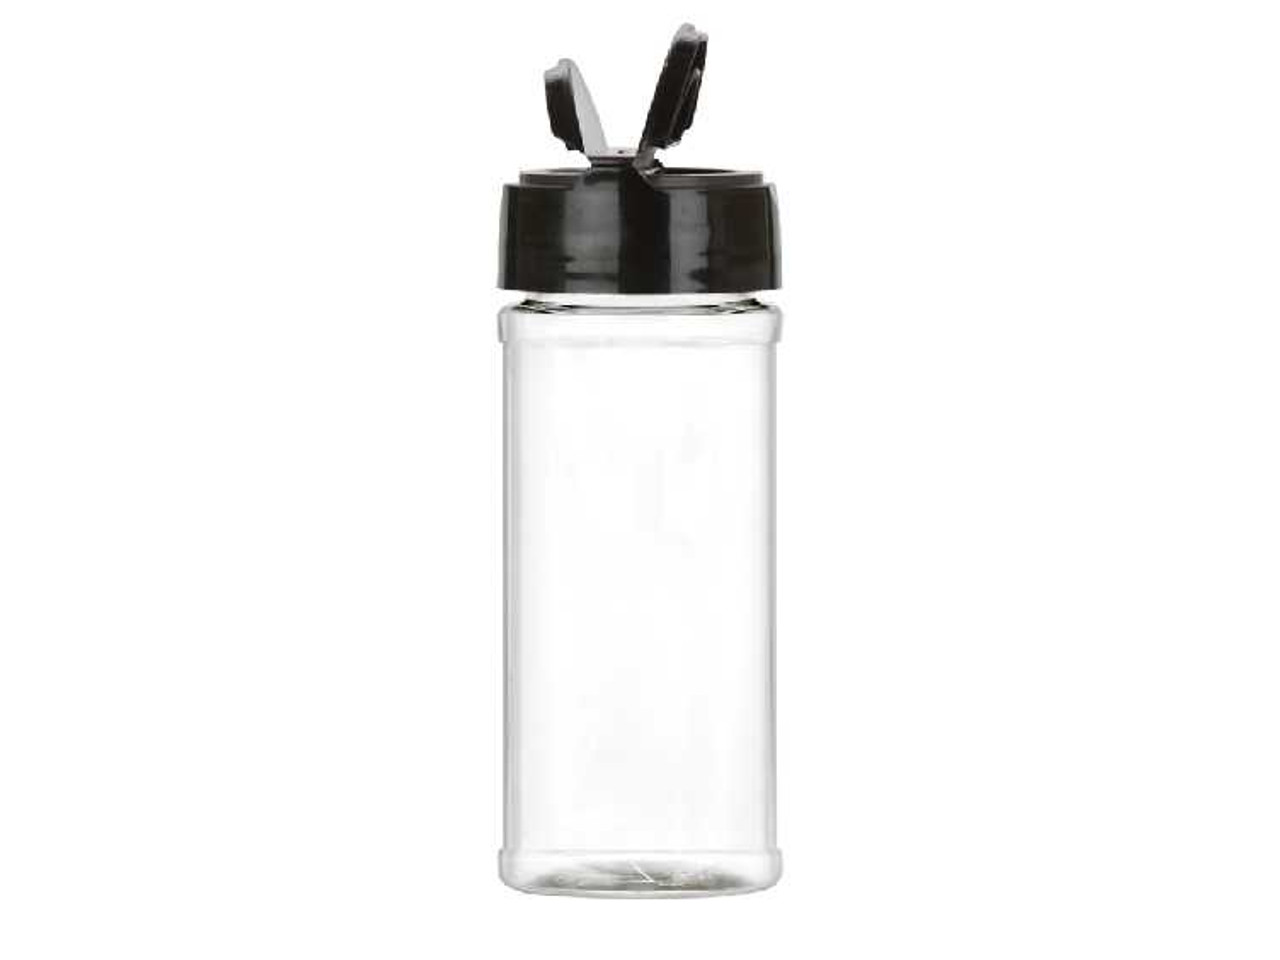 20 pcs 8 oz PET Plastic Spice Jar with Shake Dispenser Cap in your